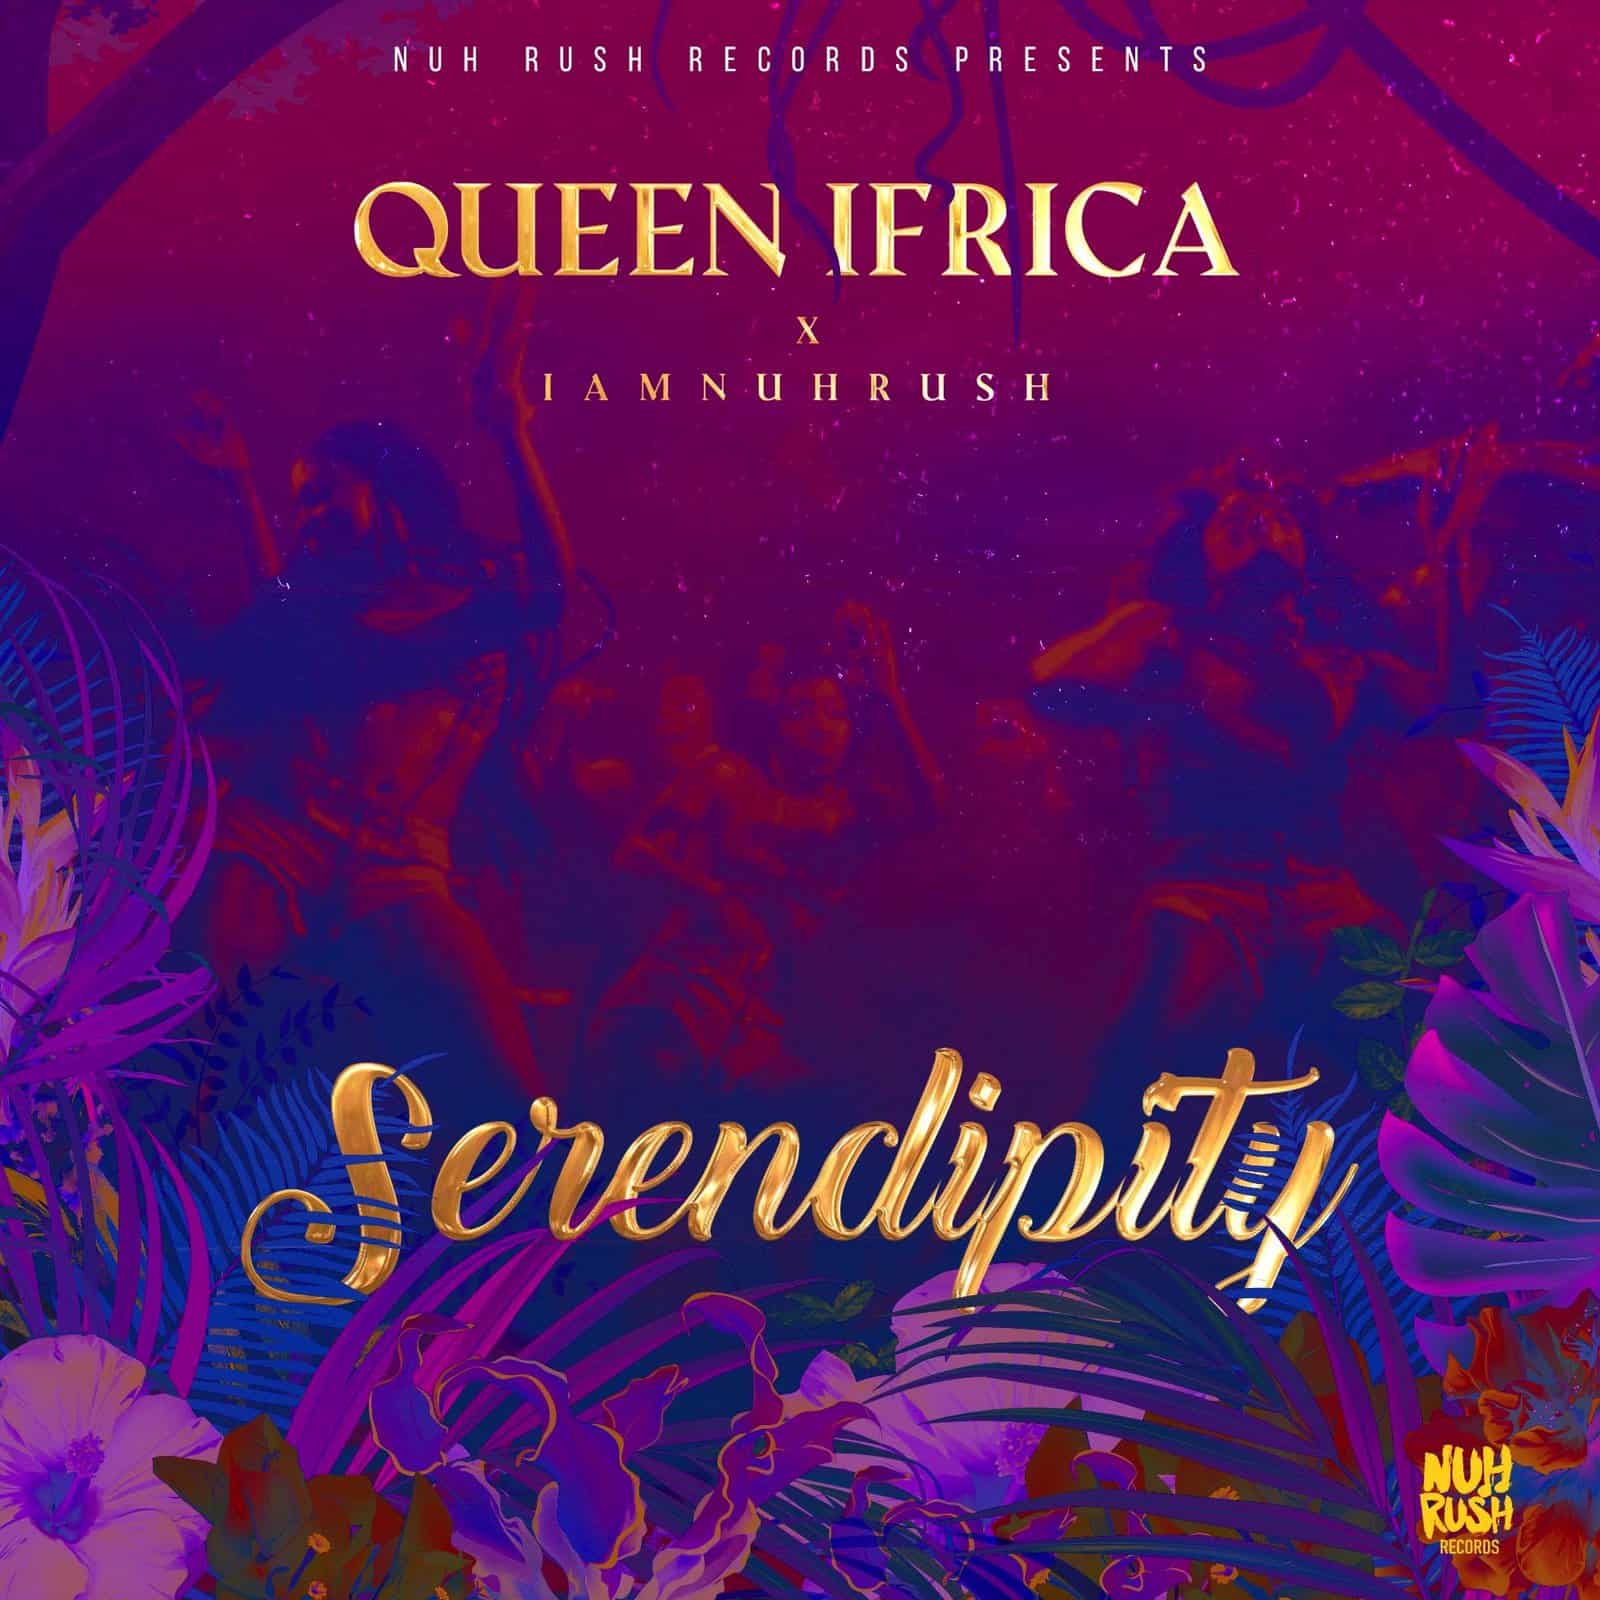 Queen Ifrica - SERENDIPITY - Nuh Rush Records